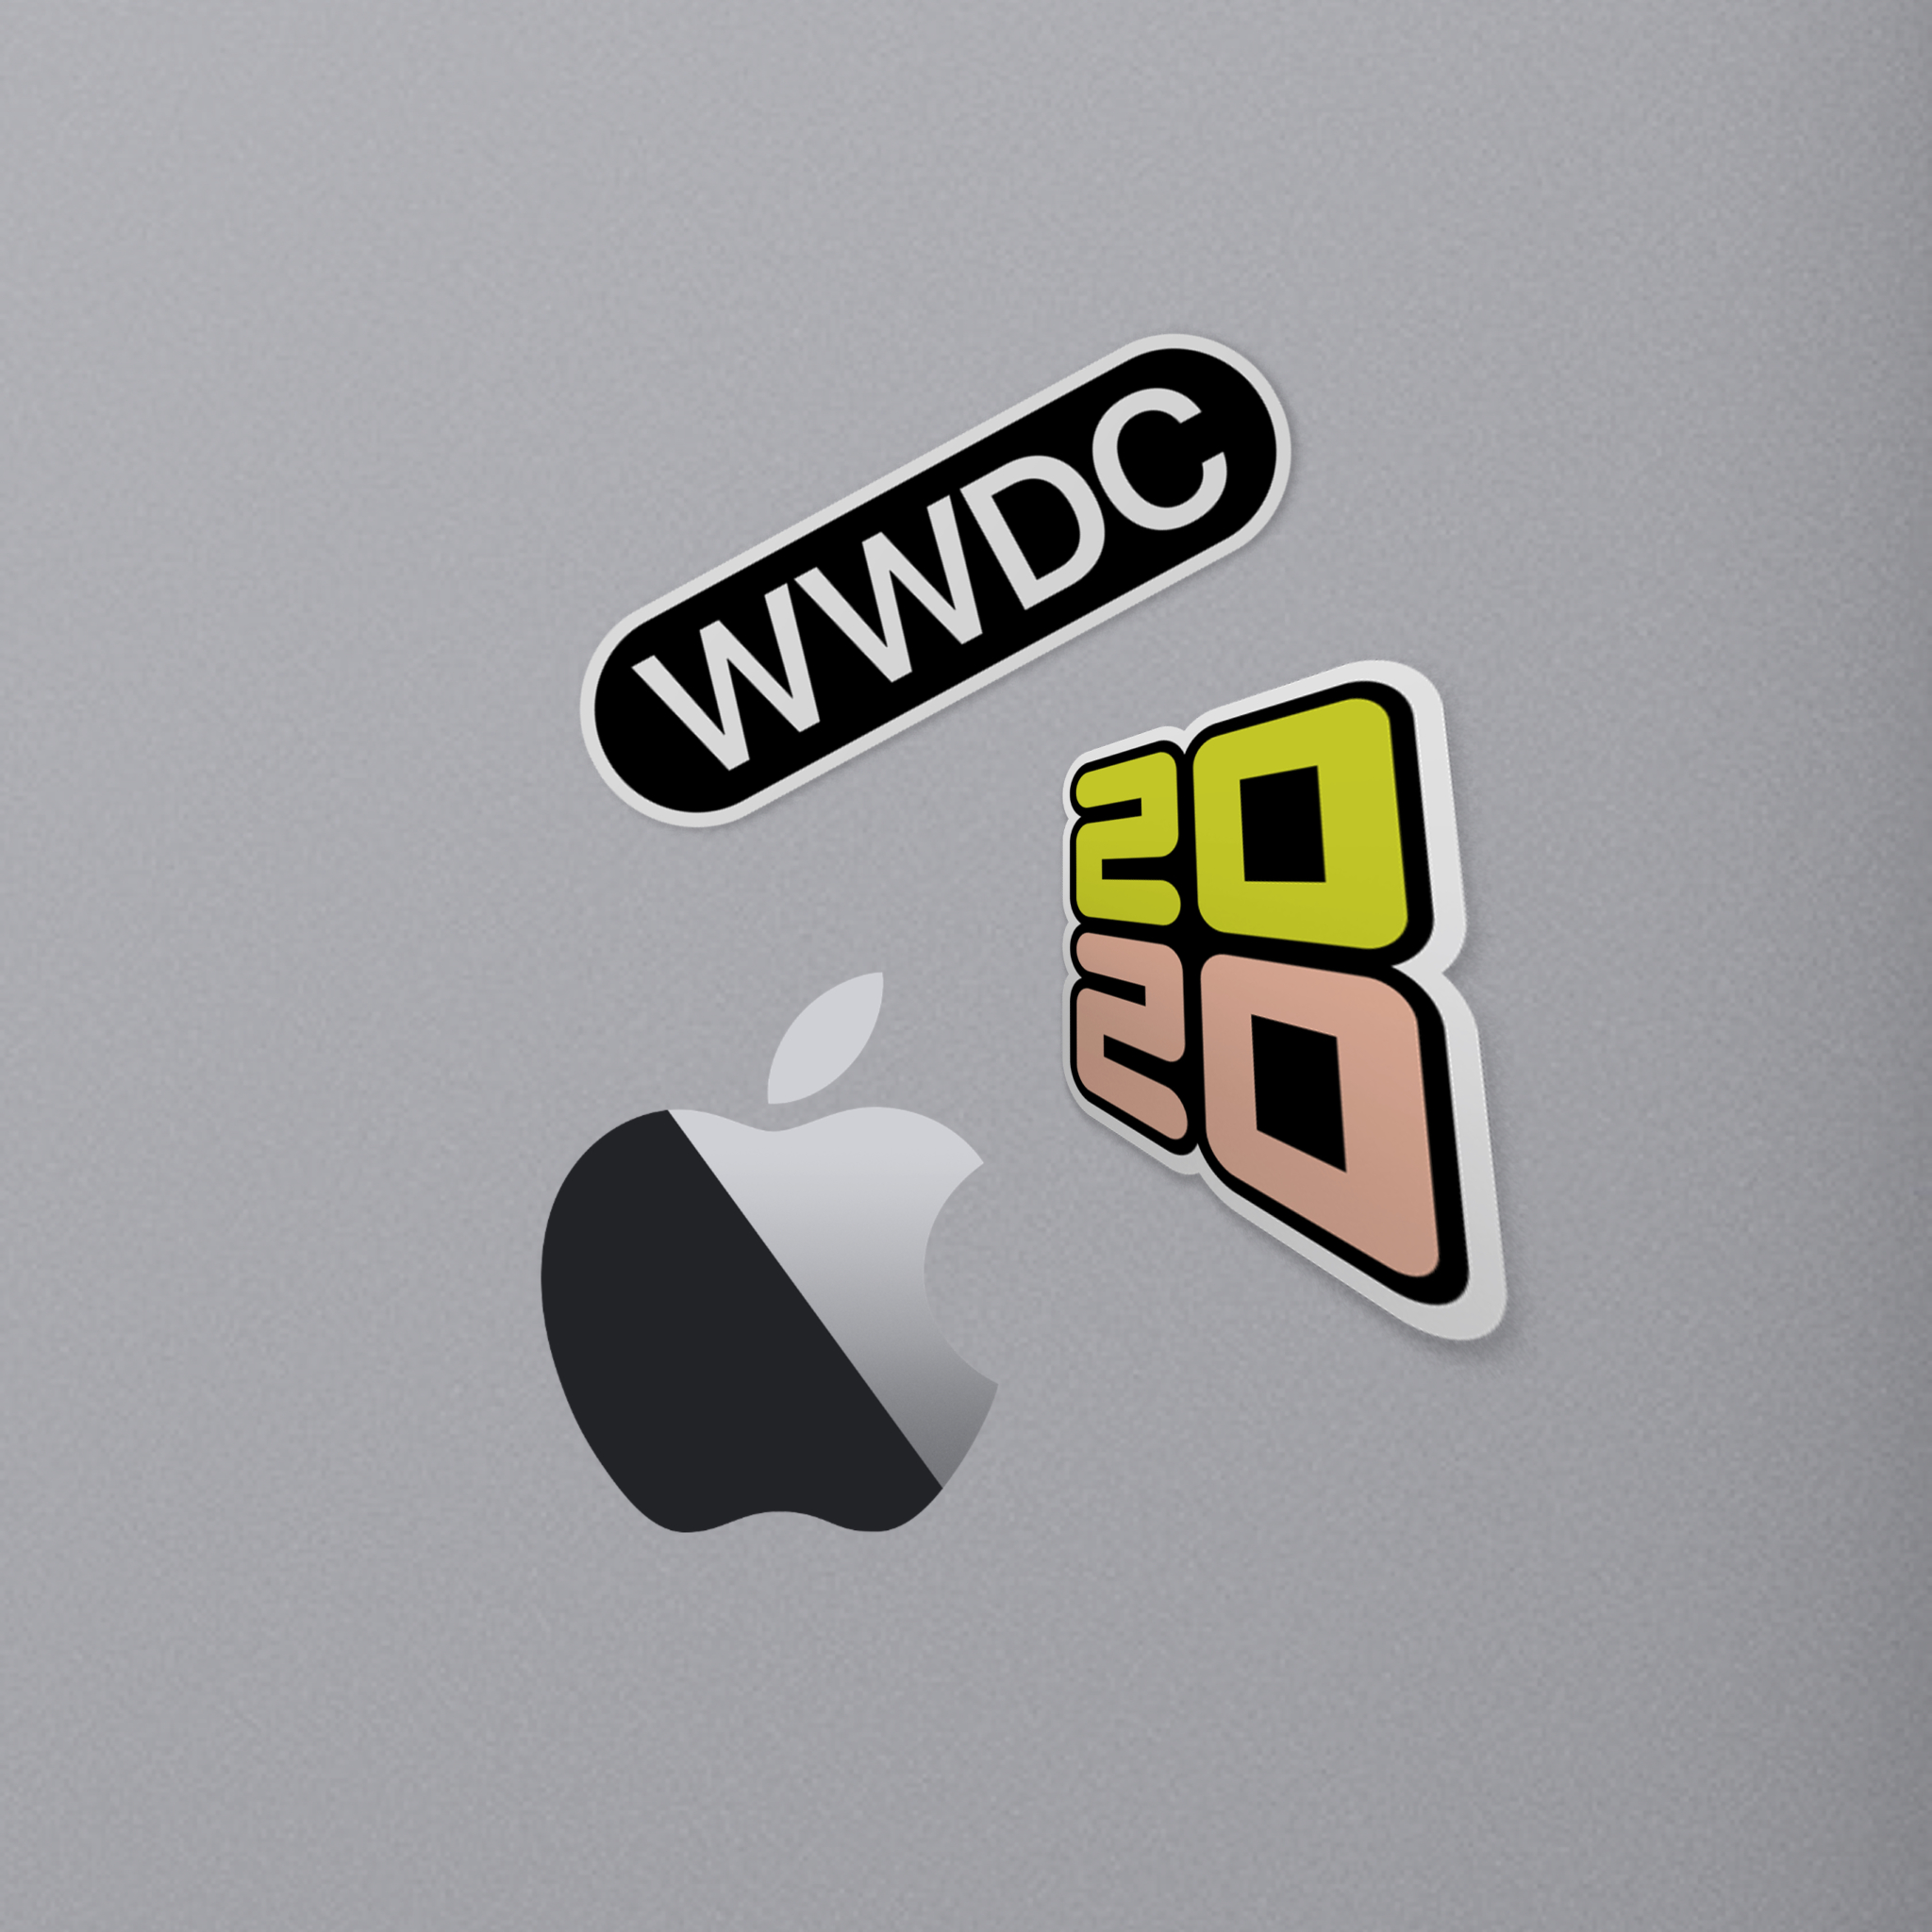 Wallpaper Weekends WWDC 2020 Wallpapers for iPhone & iPad